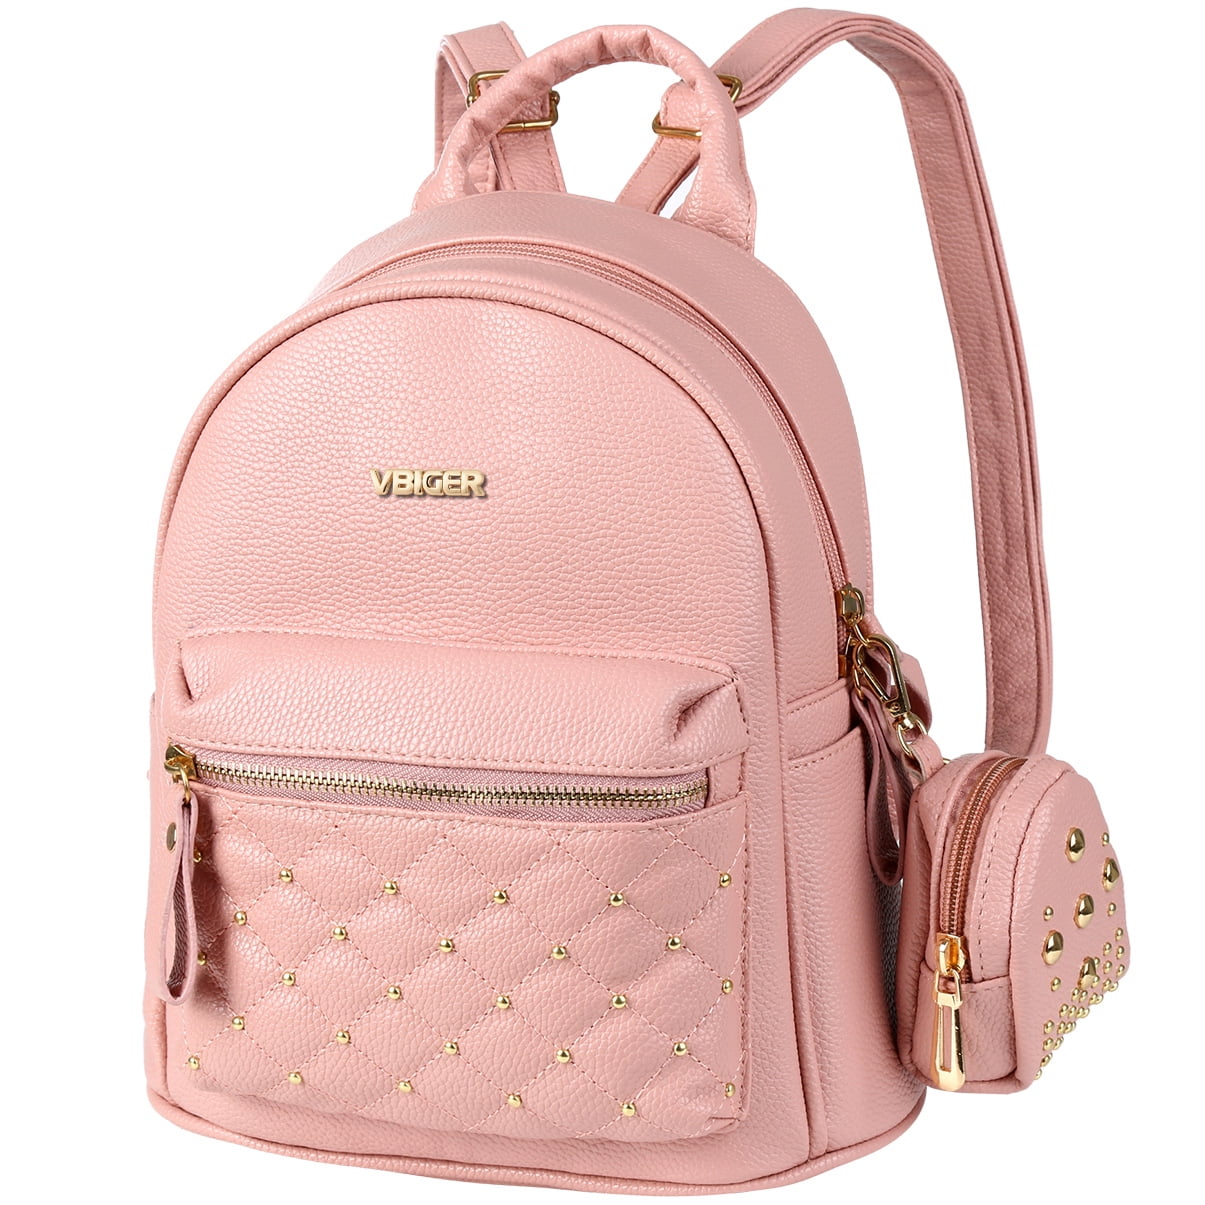 Women Girl Backpack PU Leather Rucksack Travel Shoulder School Bag Handbag New 